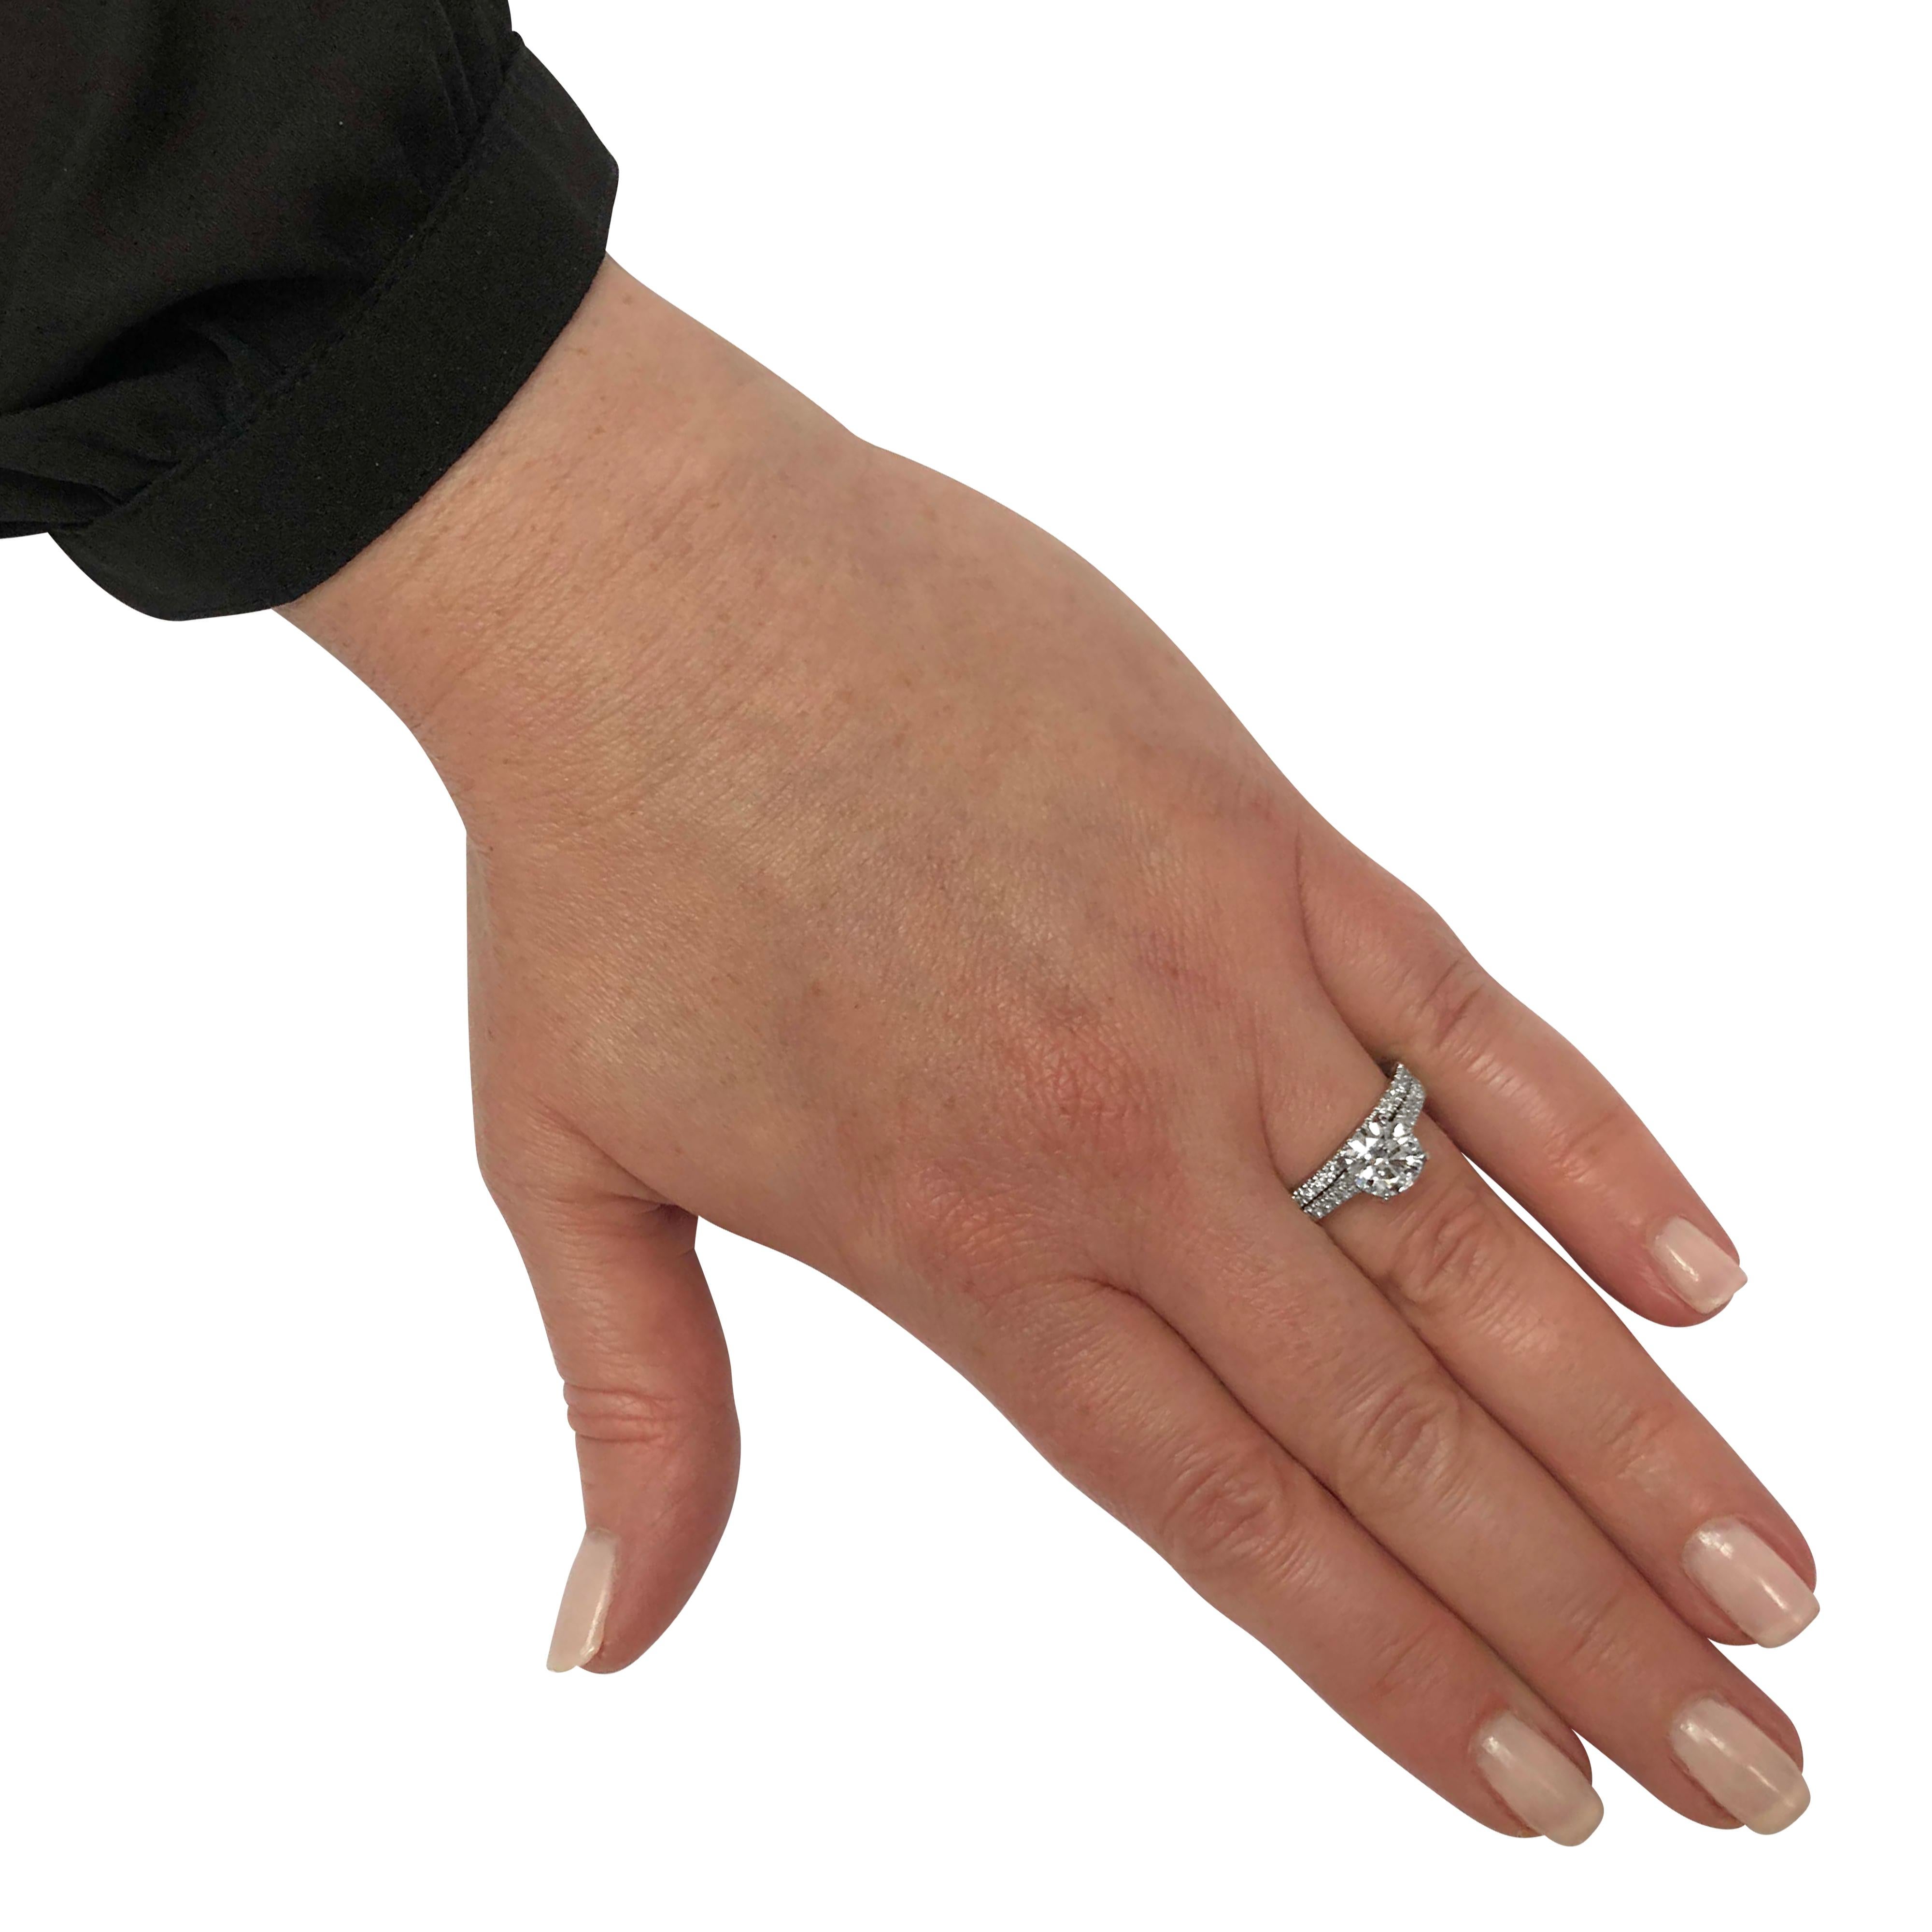 Contemporary Vivid Diamonds GIA Certified 1.51 Carat Diamond Engagement Ring Set